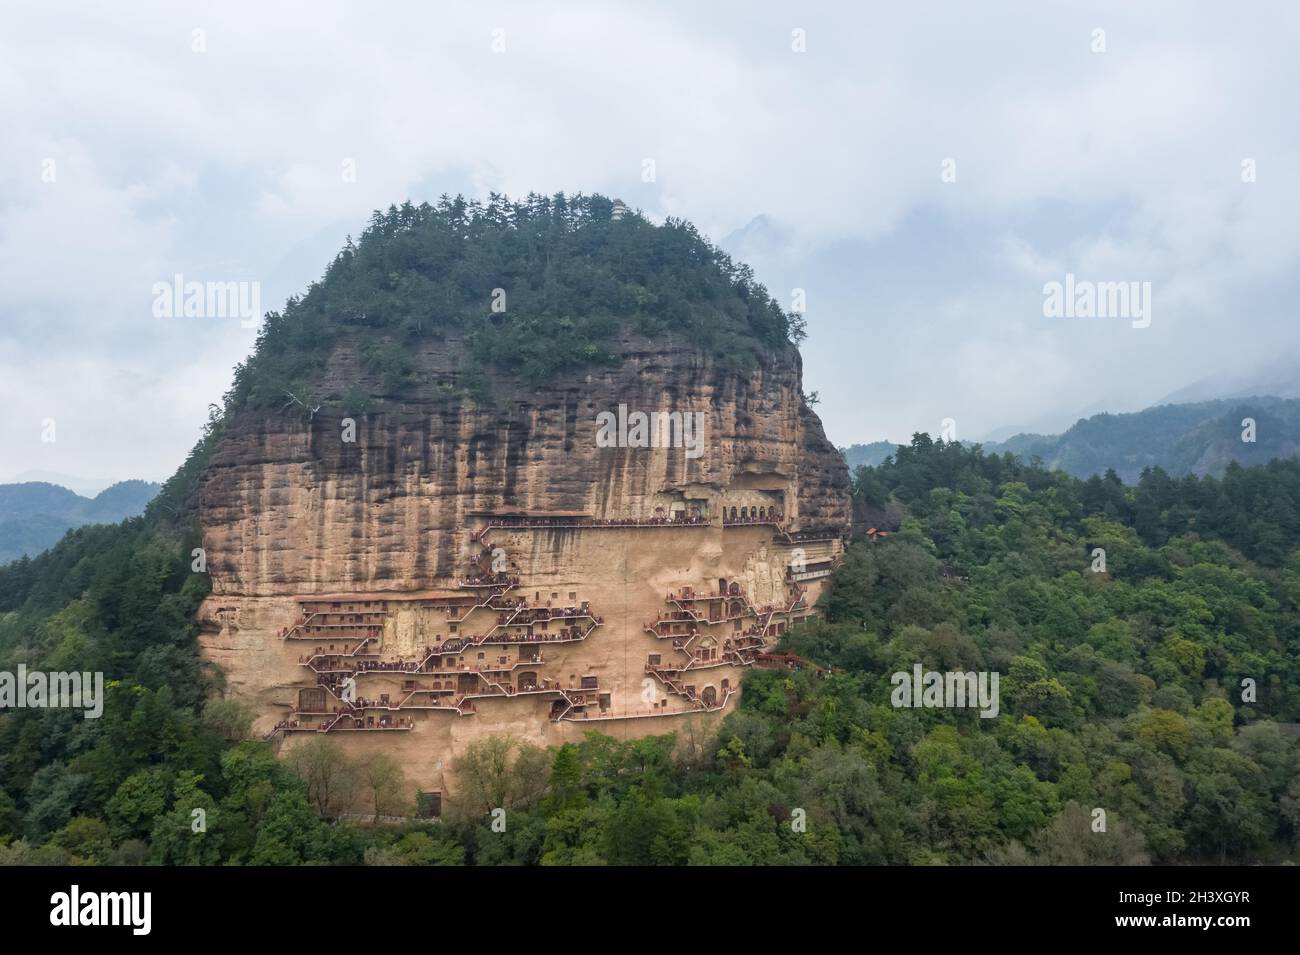 Gansu maiji grotte di montagna in nuvoloso Foto Stock